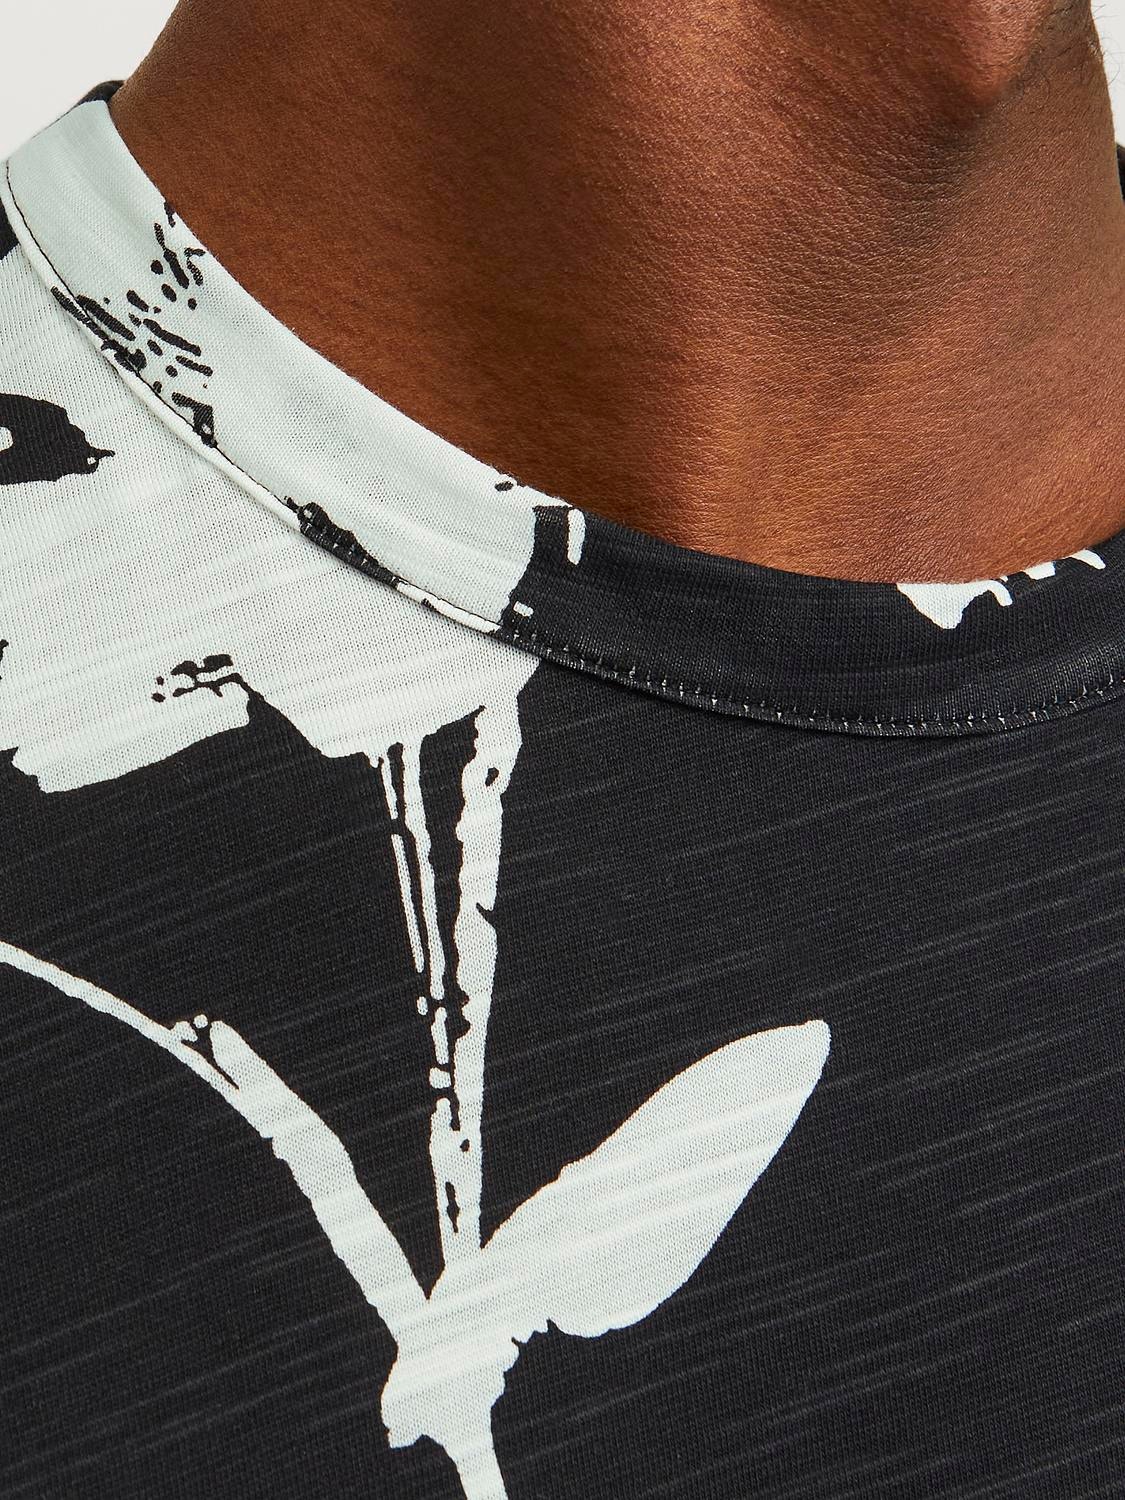 Jack & Jones All Over Print Crew neck T-shirt -Black Onyx - 12253552